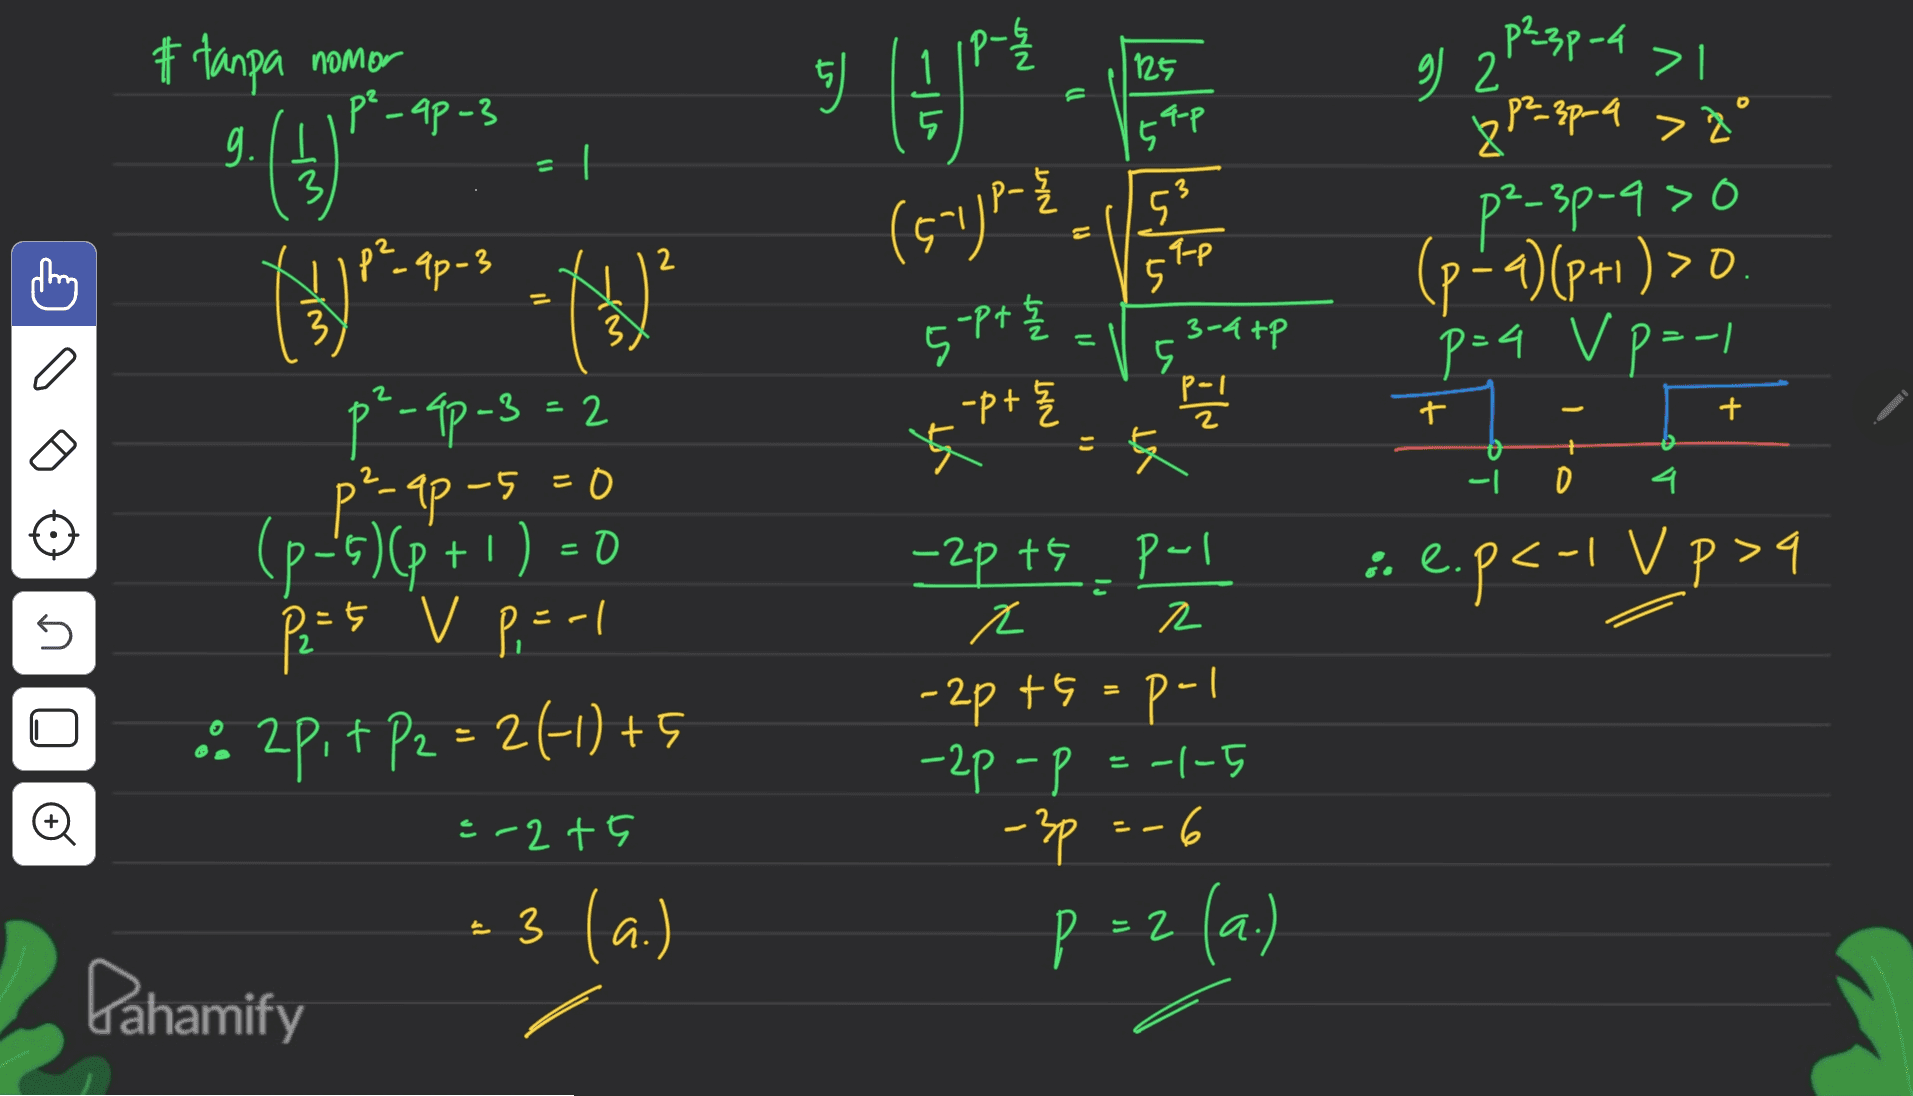 1 > # tanpa nomor p²-ap-3 9. ੧ ਵਿ" . E 125 .9-P 5 ST 5 (+) -| 3 돌 3 (s.jpg Si la p²3p-4 g) 2 > 1 8P²_3p-4 > 2° p²-3p-9>0 (p-4) (p+1)>0 p=4 Vp--1 2 p² -9p-3 2 2 3 5-P+ $ .9-8 5 3-4 tp P= // ५ 2 t + -p+ 팃 я 2 EO -1 0 = p²-ap-3 = 2 s2 p²-ap-s (p='s)[p'+1) = 0 ) P2=5 P .: 2p. + P2 = 26-1) + 5 <-| p :5 V P,= -1 :.e.p<- Vp>4 5 I t -2pts pul z R -2pts=pol = -1-5 -3p 6 Р P 2 2 (a.) -2p - P o e-2 + 는 .3 (a.) a Dahamify 